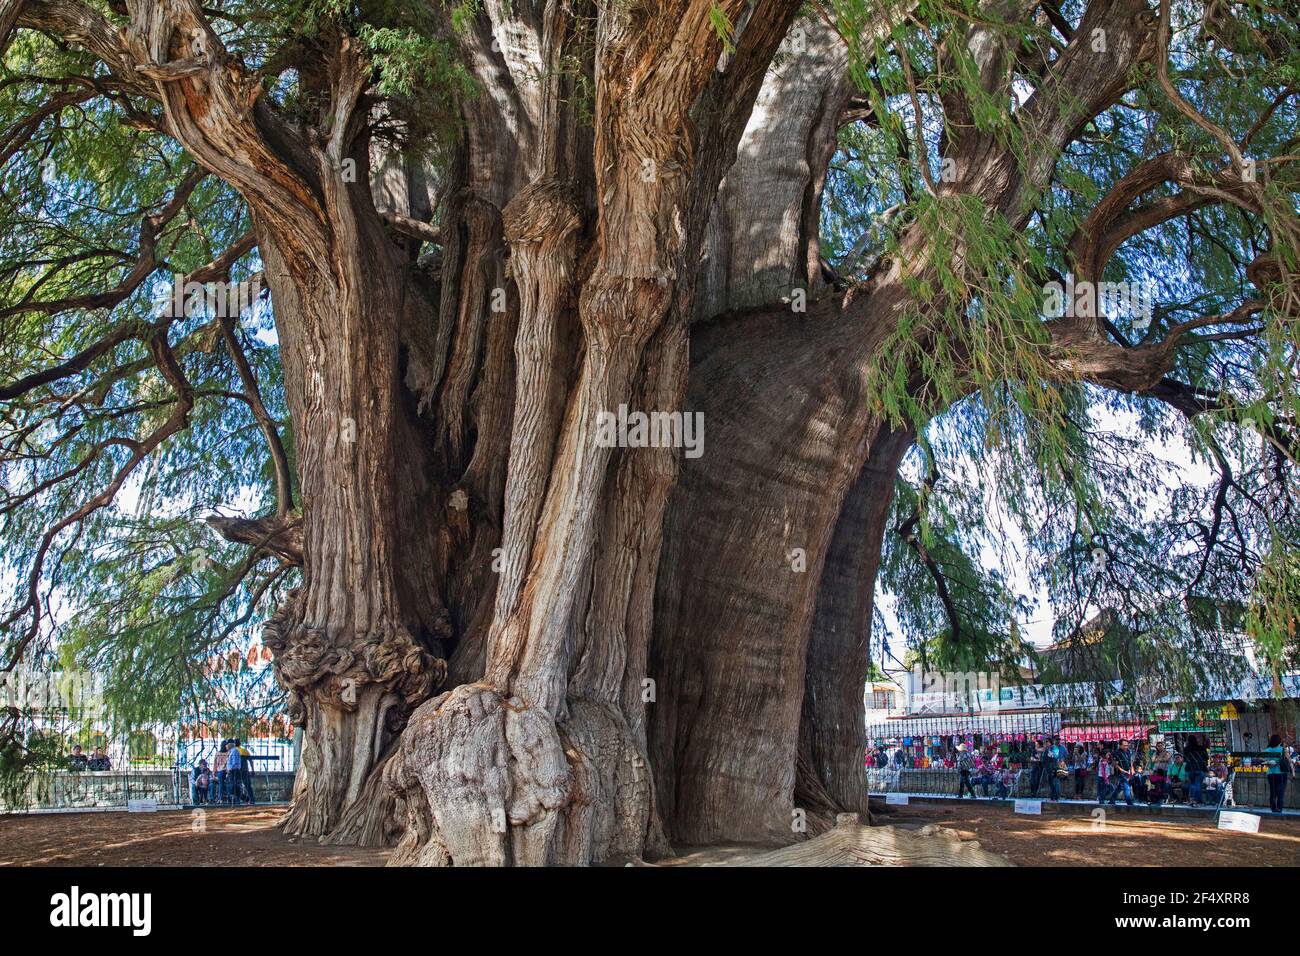 Tule Tree, 2000-year-old Montezuma cypress (Taxodium mucronatum) with the widest girth in the world (40m) at Santa María del Tule, Oaxaca, Mexico Stock Photo